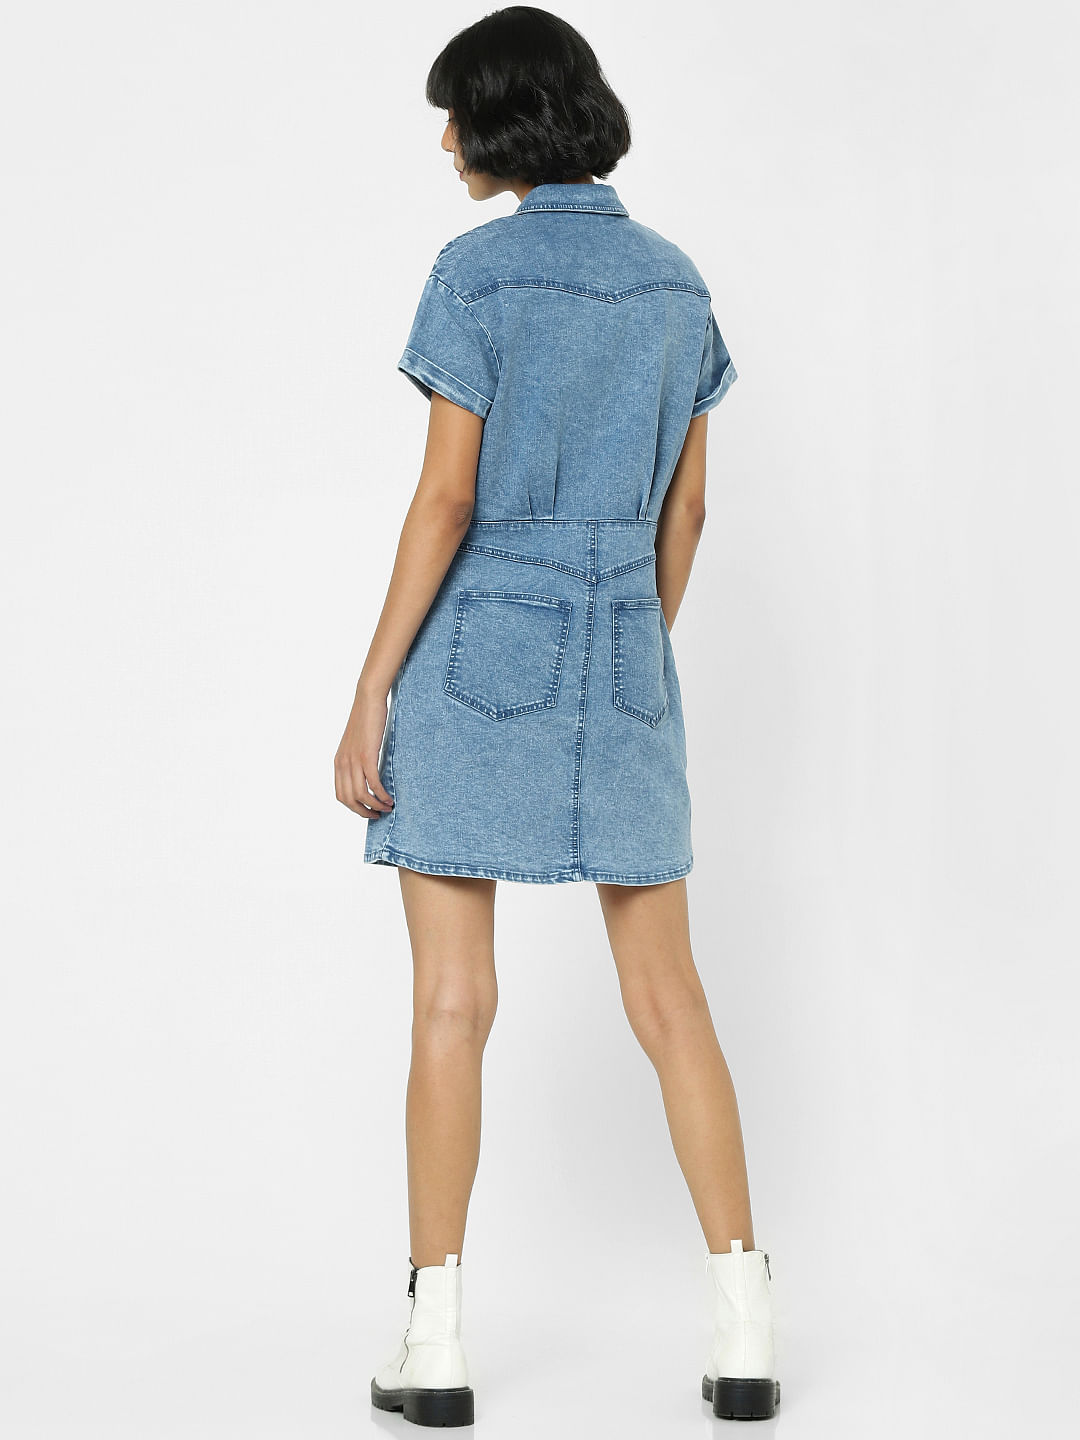 Buy KDF Denim Shirt Dress Women - Denim Dress for Women with Pockets Denim  Button Down Shirt Dress, Medium Blue, L at Amazon.in